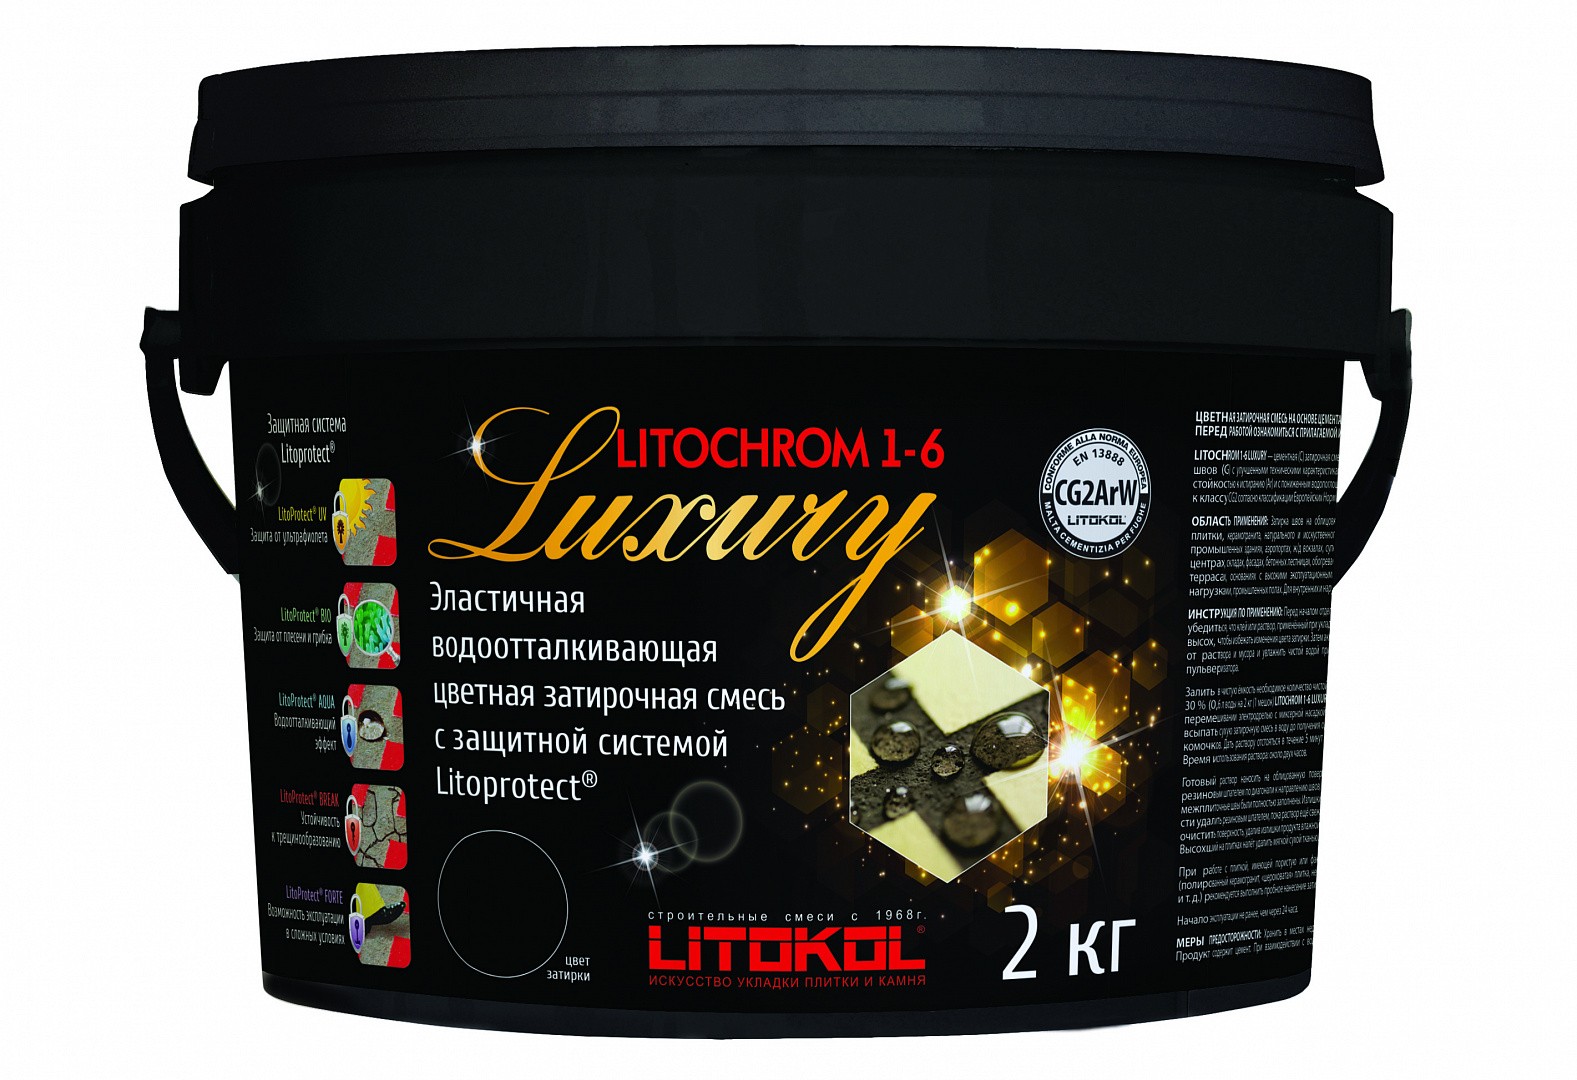 Цементная затирочная смесь LITOCHROM 1-6 LUXURY C.680